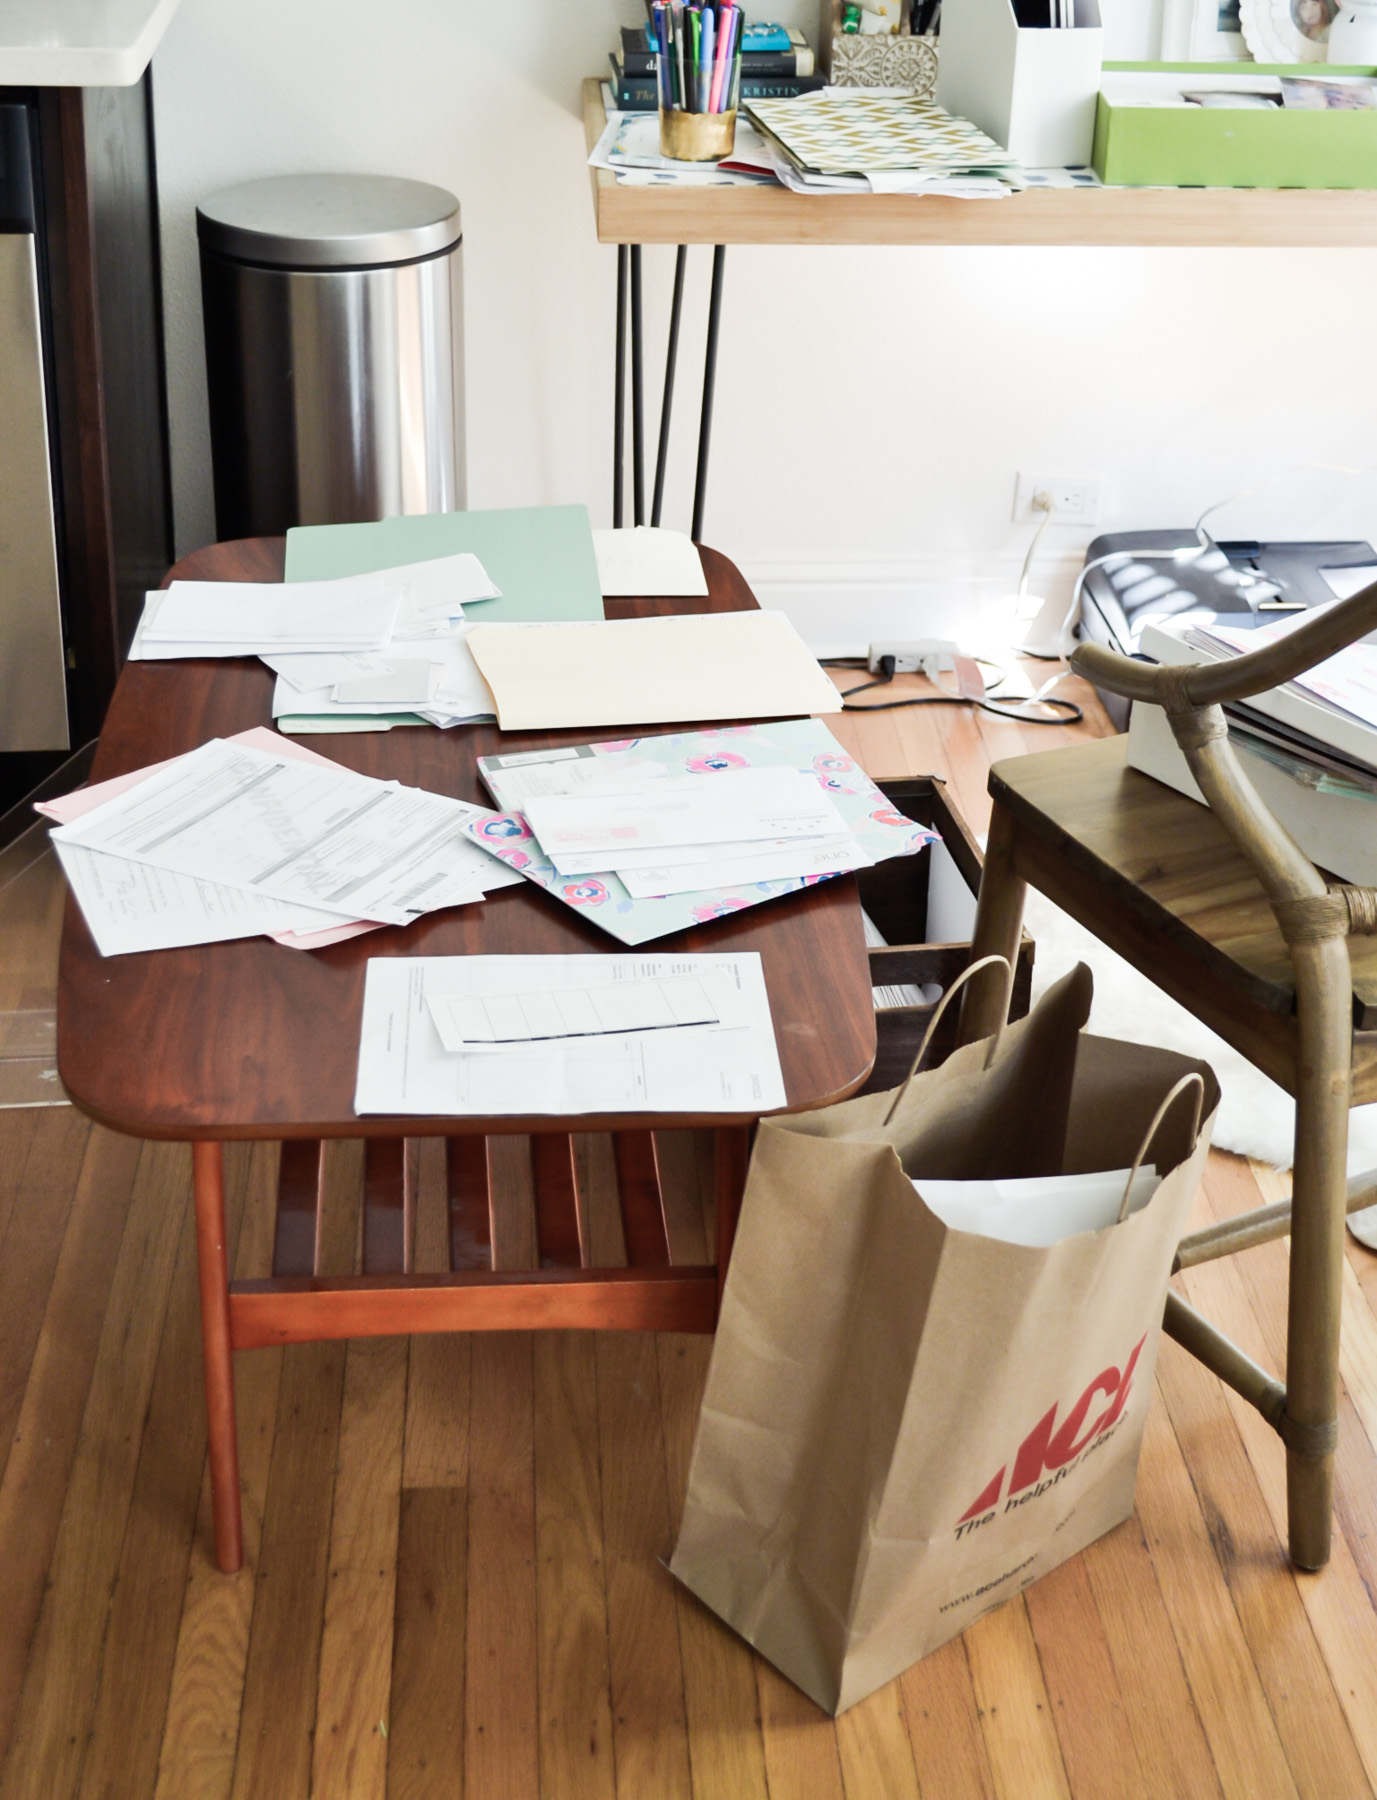 process of organizing paperwork with TaskRabbit